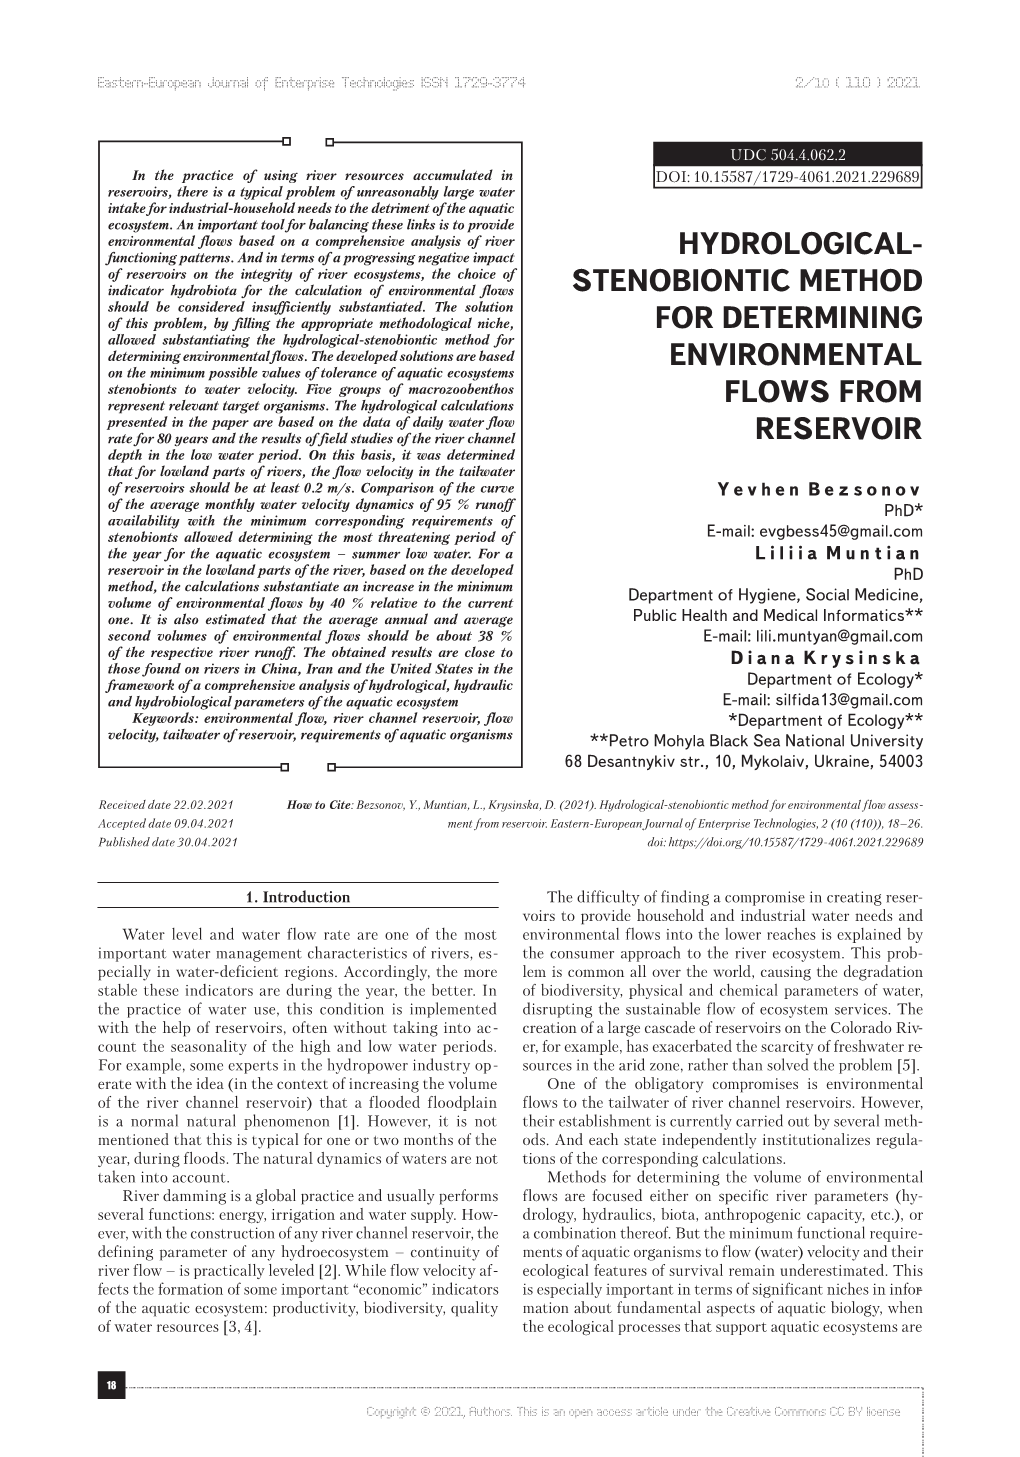 Hydrological- Stenobiontic Method for Determining Environmental Flows from Reservoir